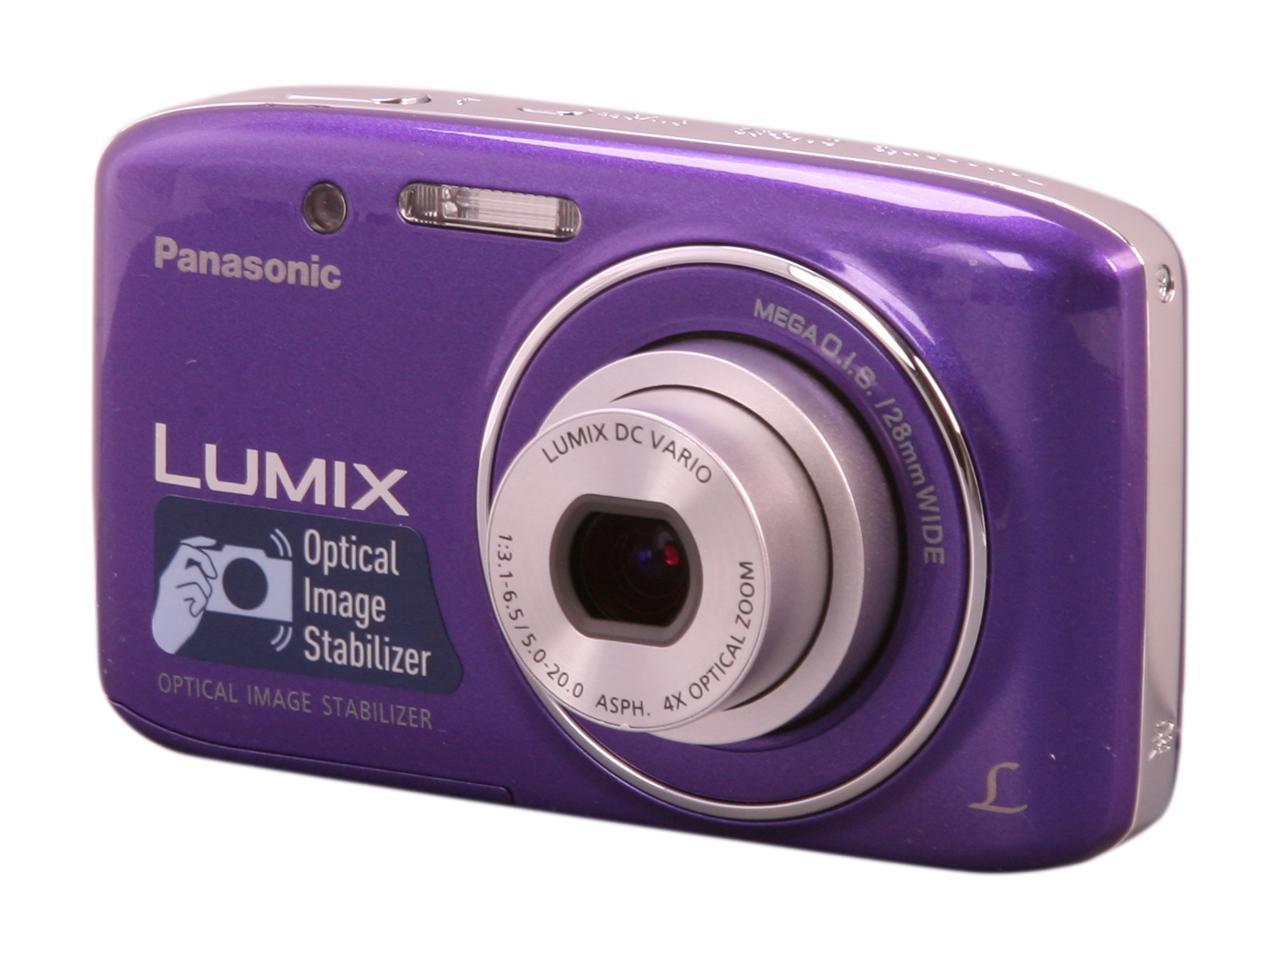 vertrekken Keelholte Chinese kool Panasonic LUMIX DMC-S2 Violet 14.1 MP 28mm Wide Angle Digital Camera -  Newegg.com